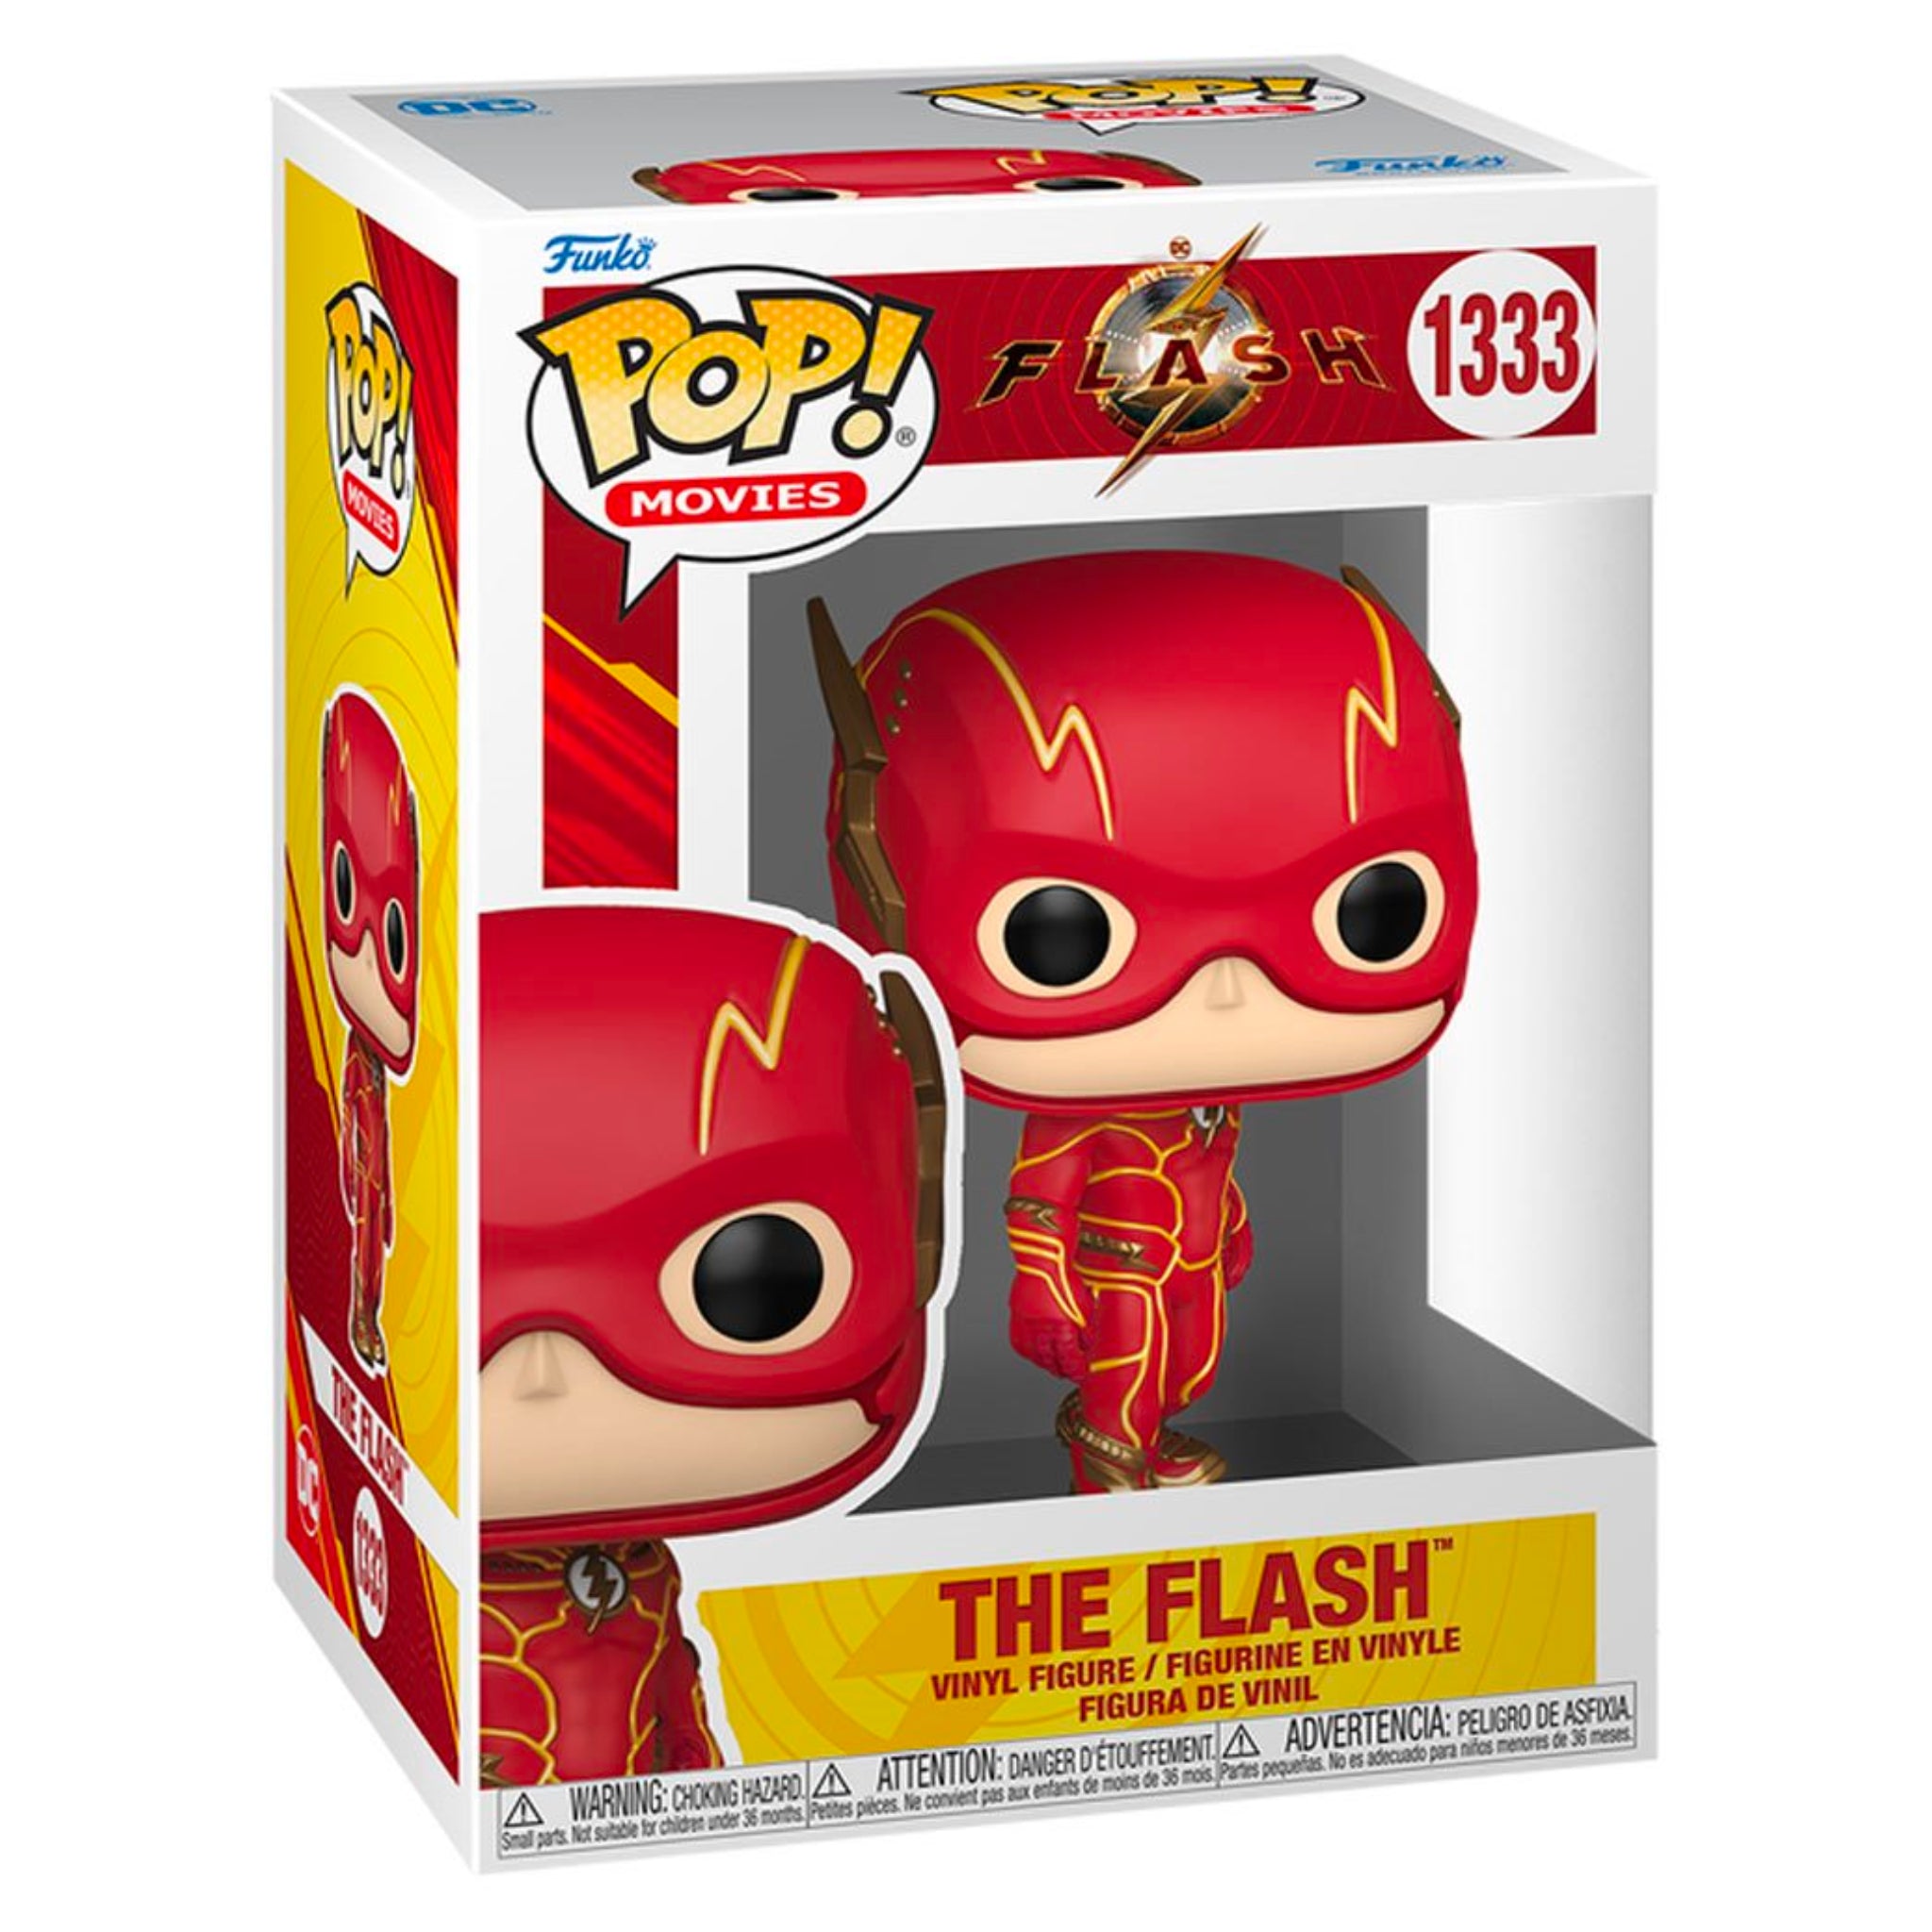 The Flash Funko Pop!